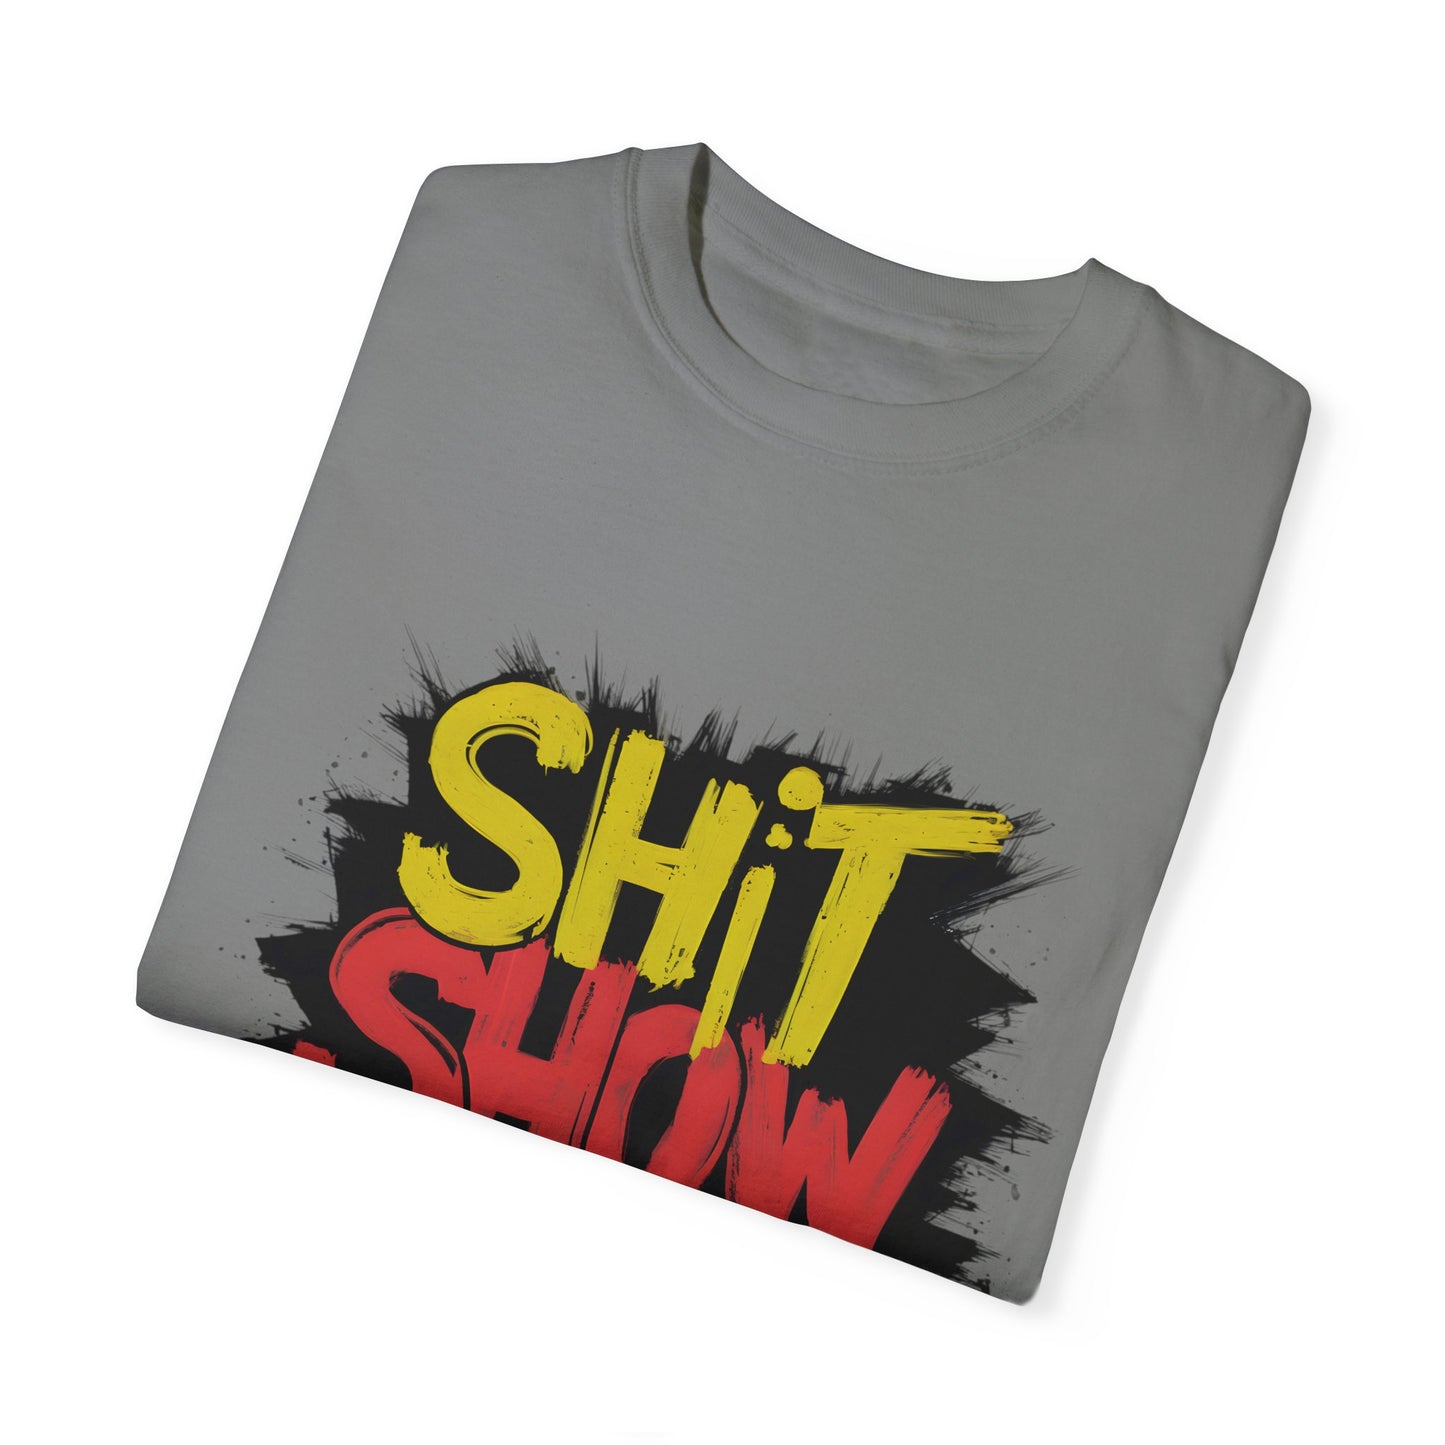 Shit Show Supervisor Urban Sarcastic Graphic Unisex Garment Dyed T-shirt Cotton Funny Humorous Graphic Soft Premium Unisex Men Women Grey T-shirt Birthday Gift-41